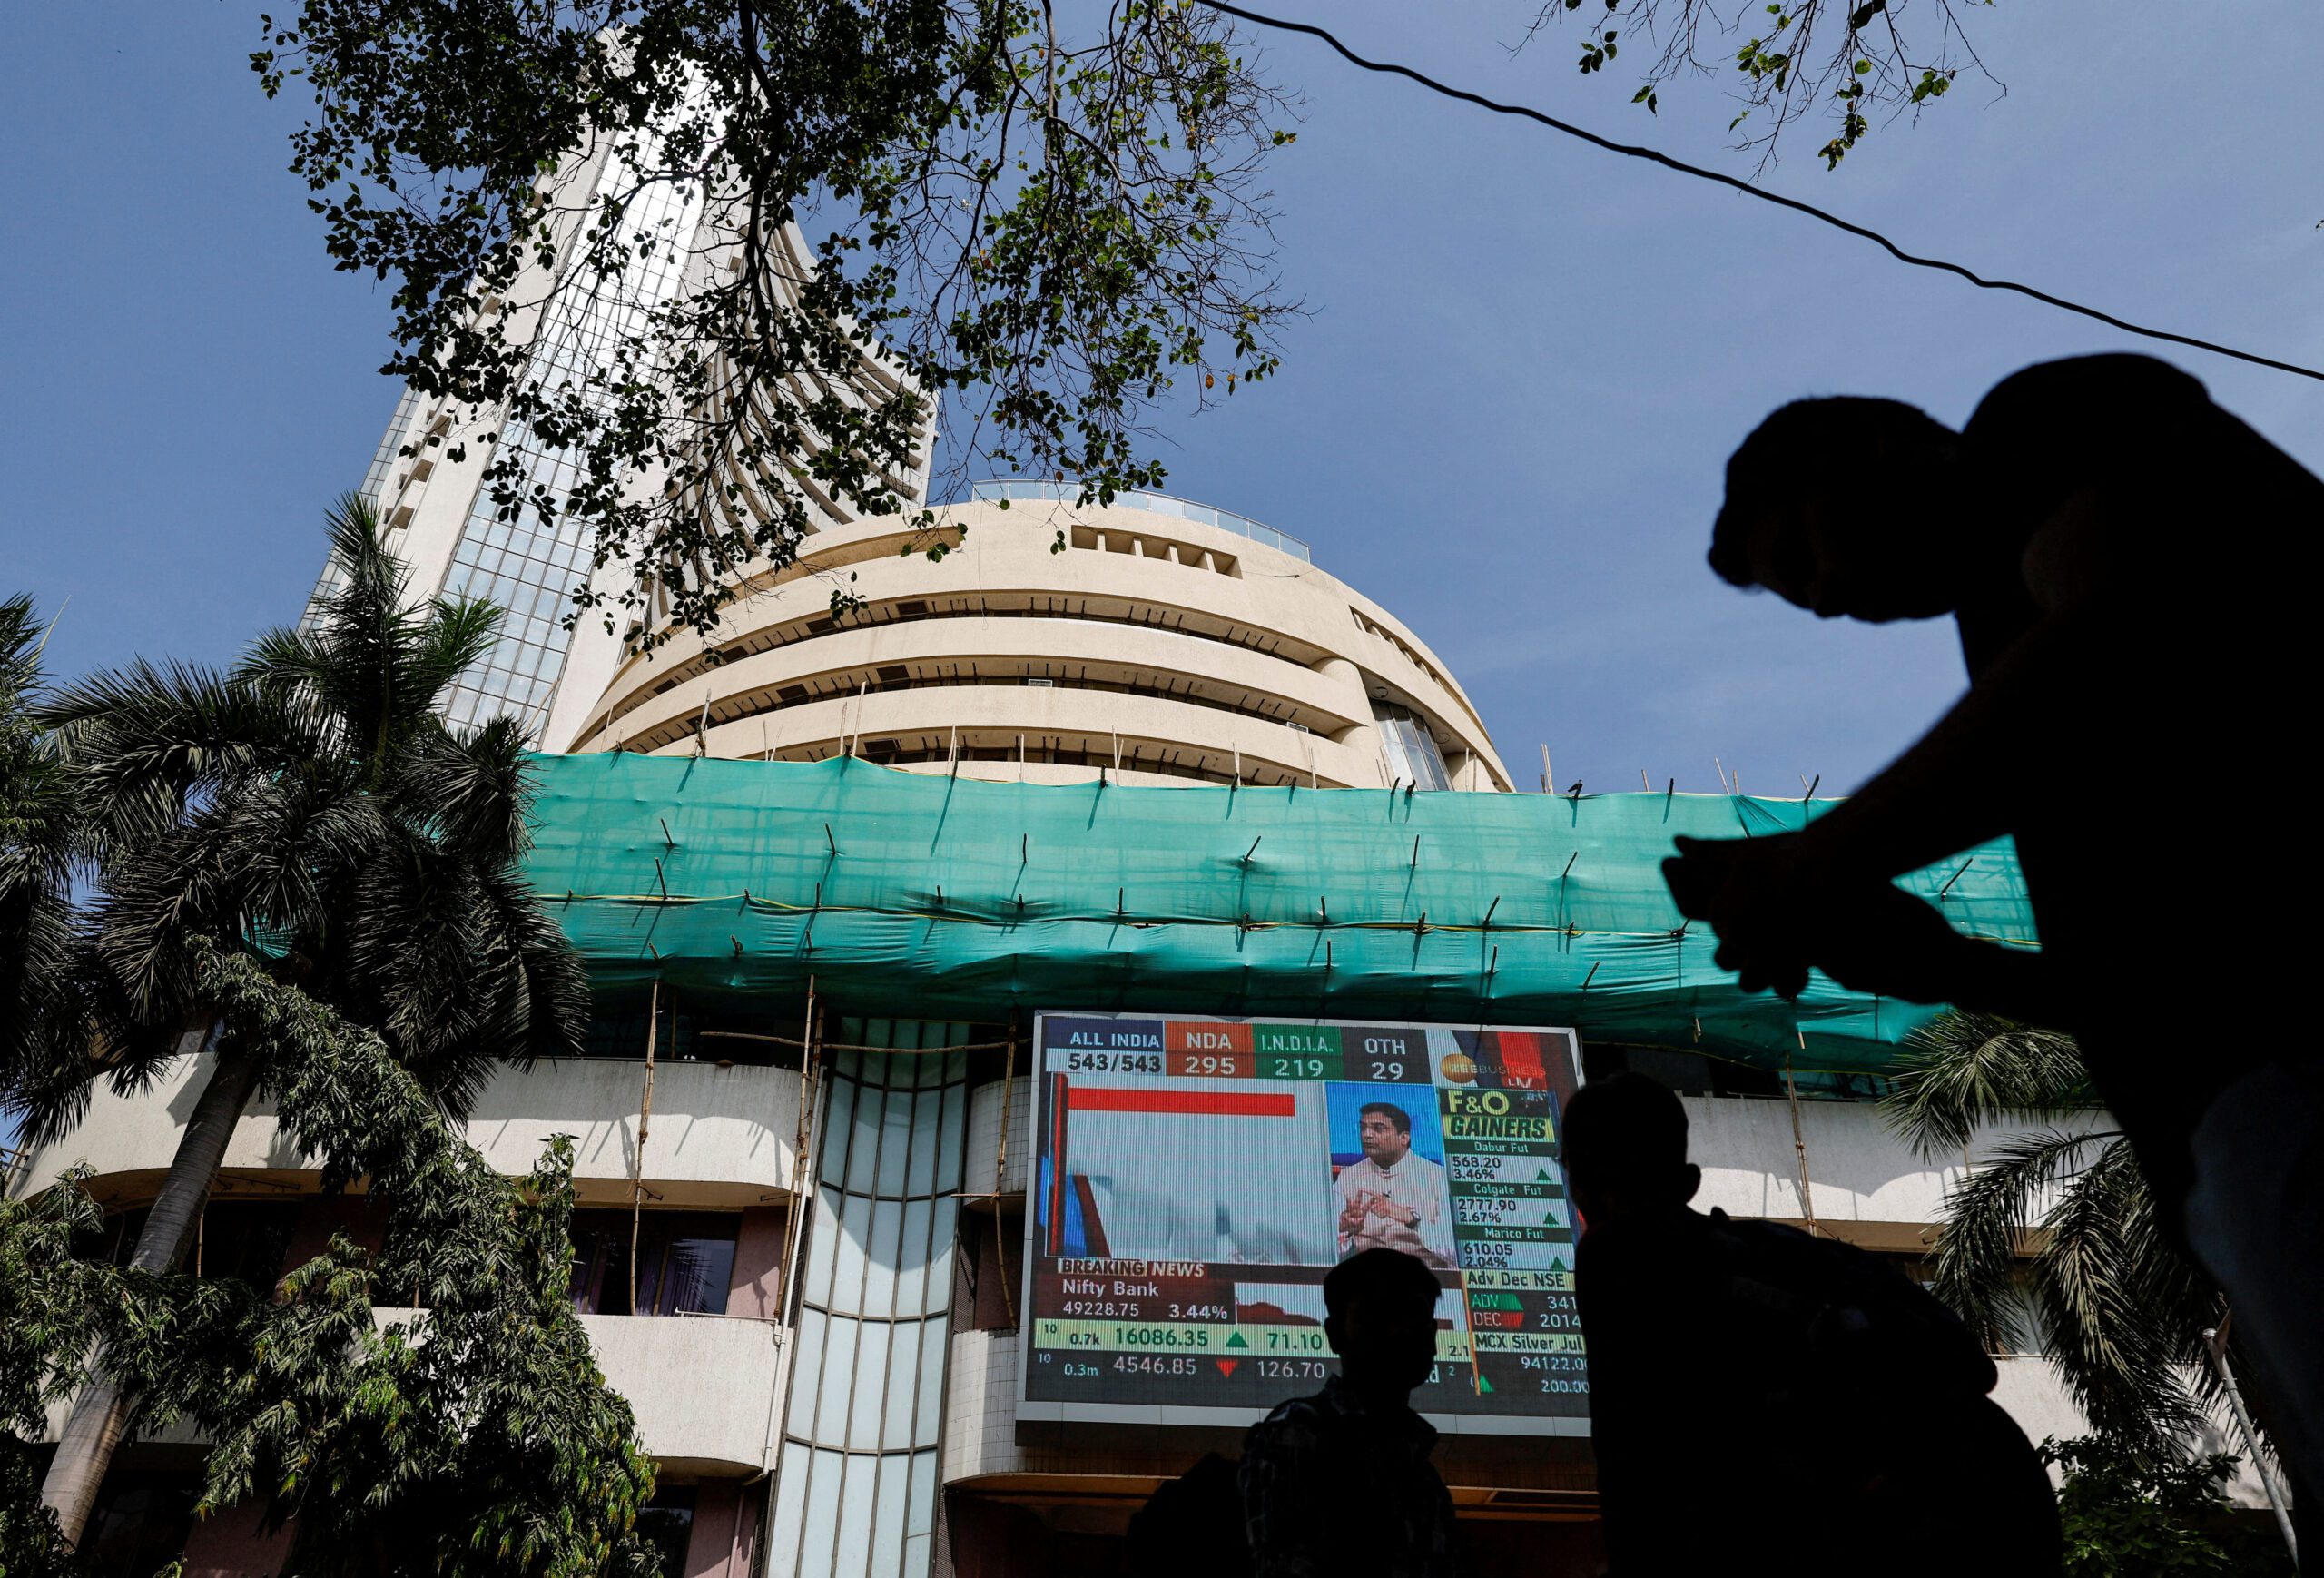 India regulator plans tweaks to address derivative trading risks